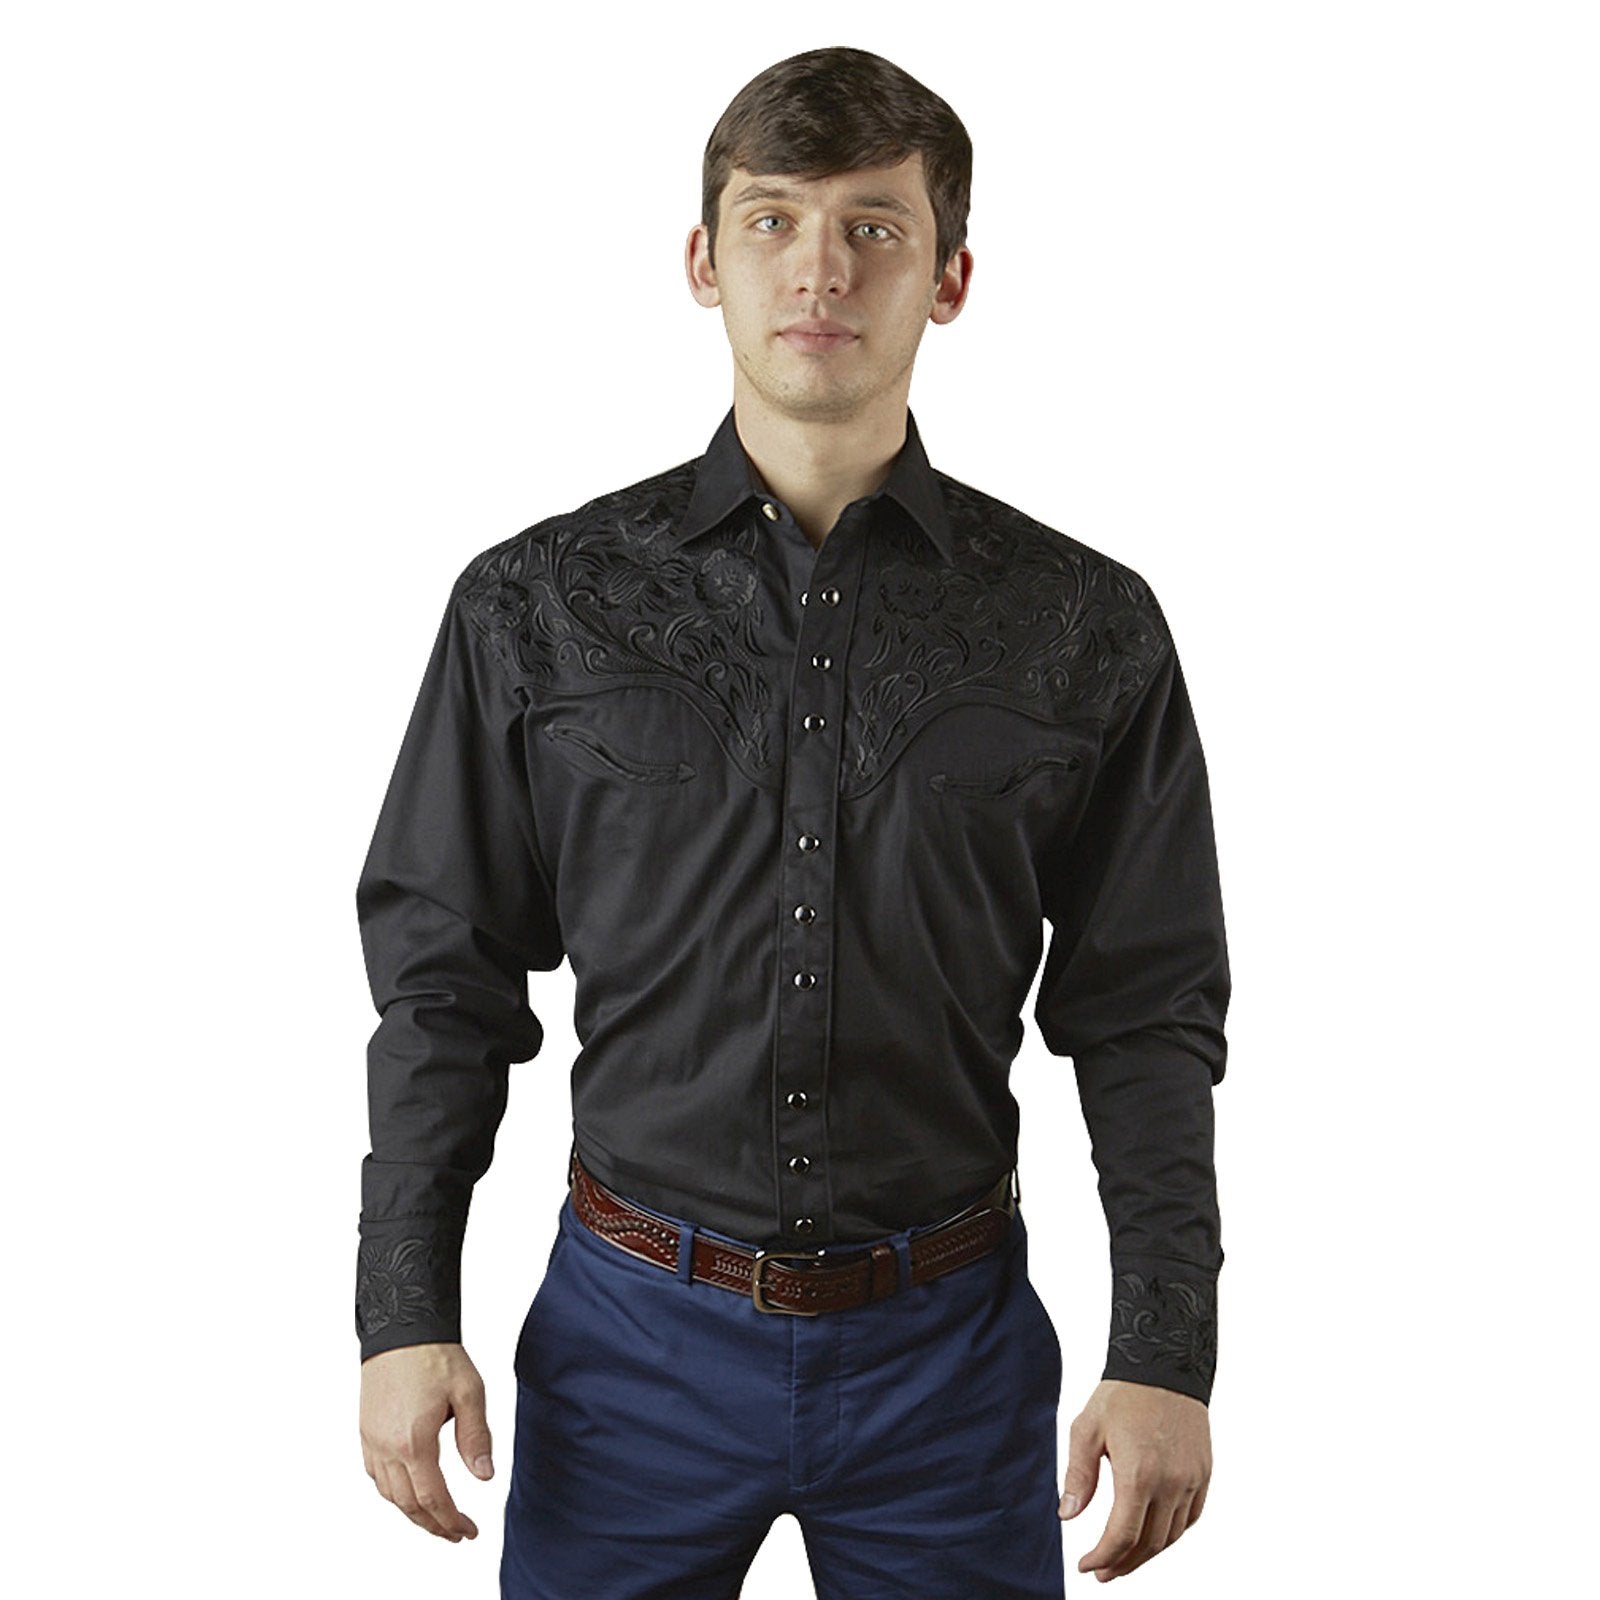 Rockmount Ranch Wear Men's Vintage Western Shirt Floral Embroidery Black Front